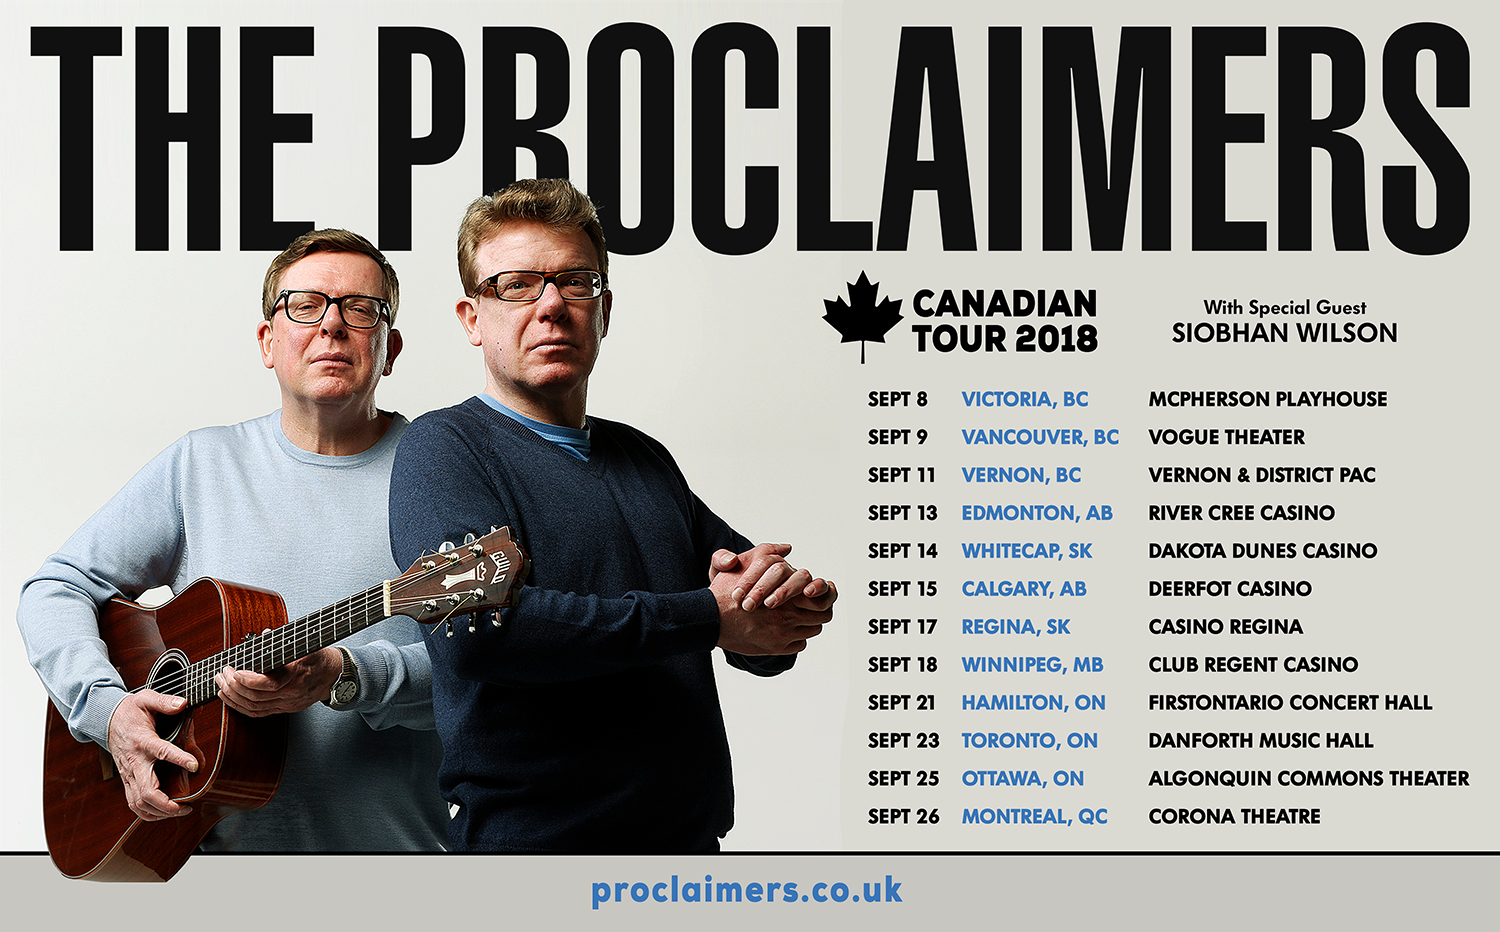 do the proclaimers still tour